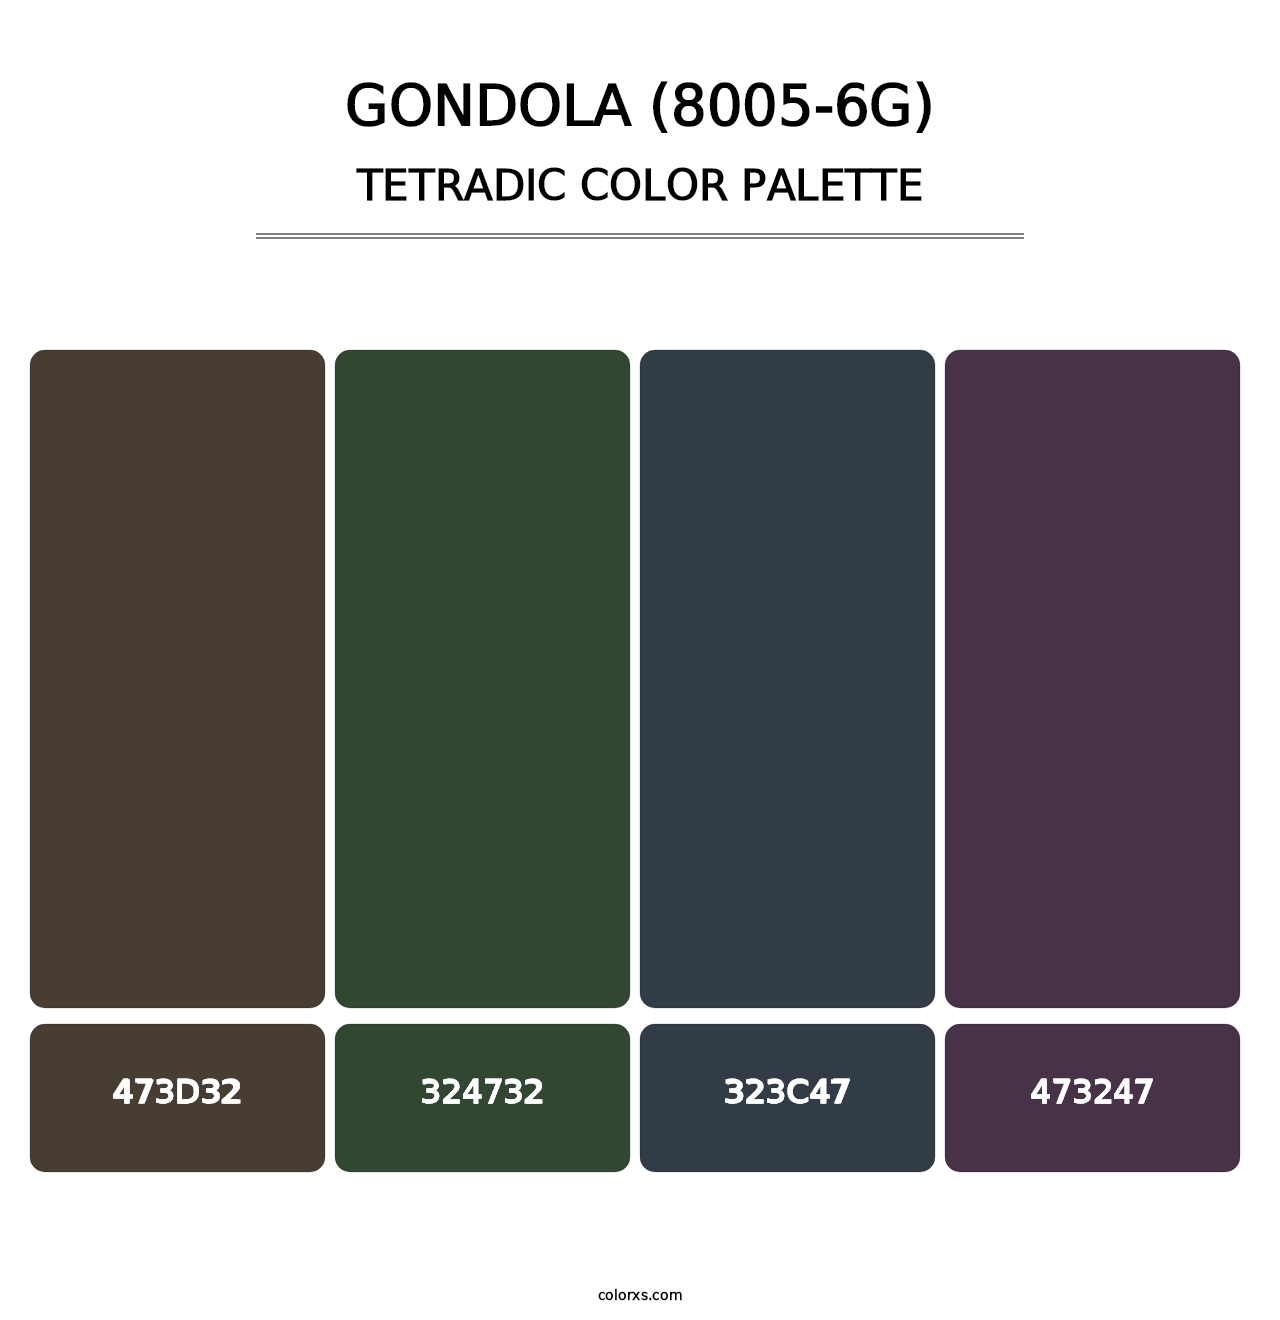 Gondola (8005-6G) - Tetradic Color Palette